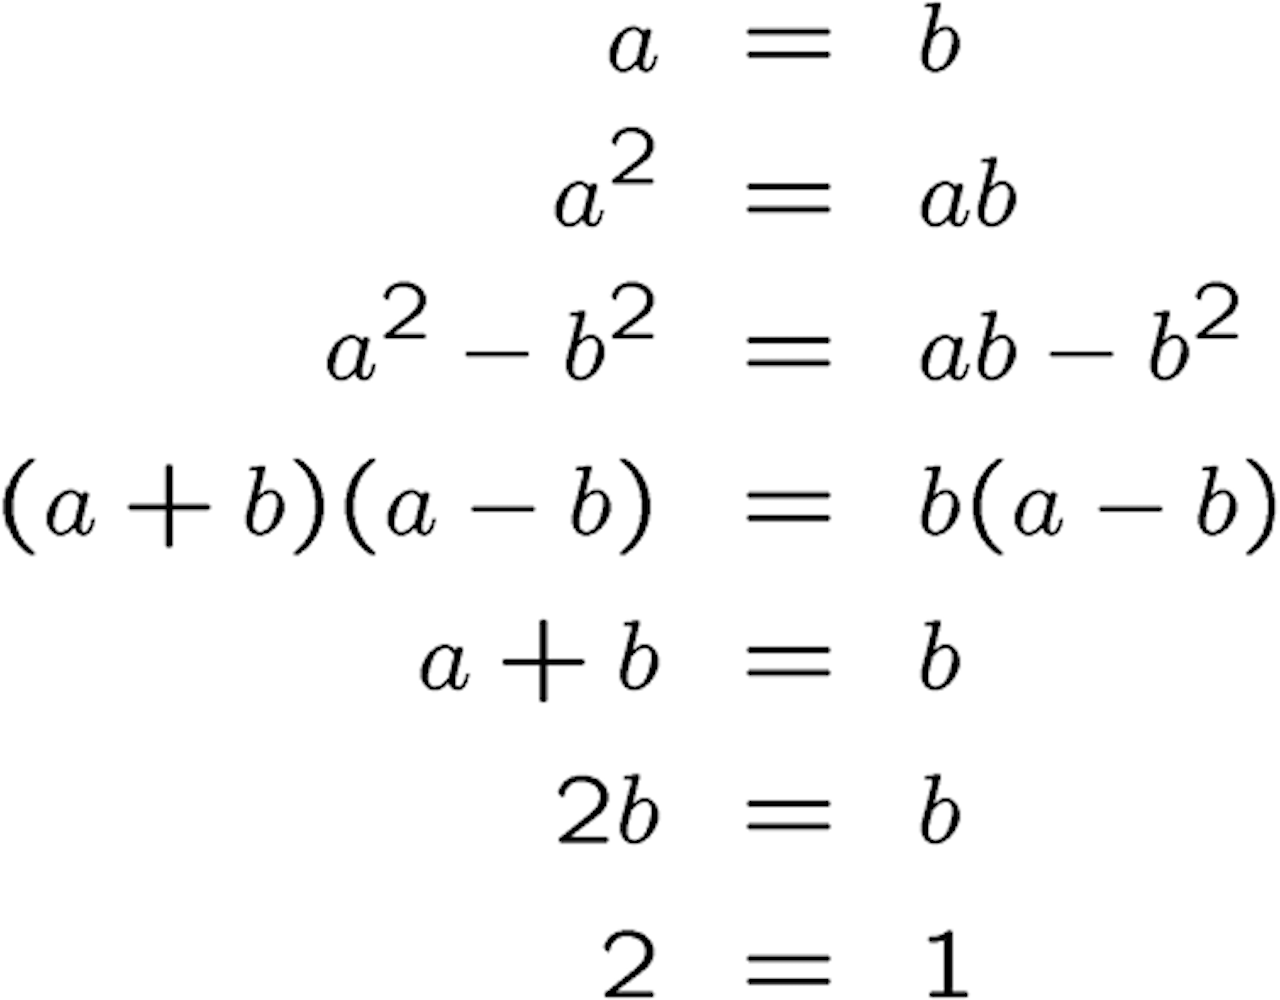 "2=1" Mathematical Fallacy